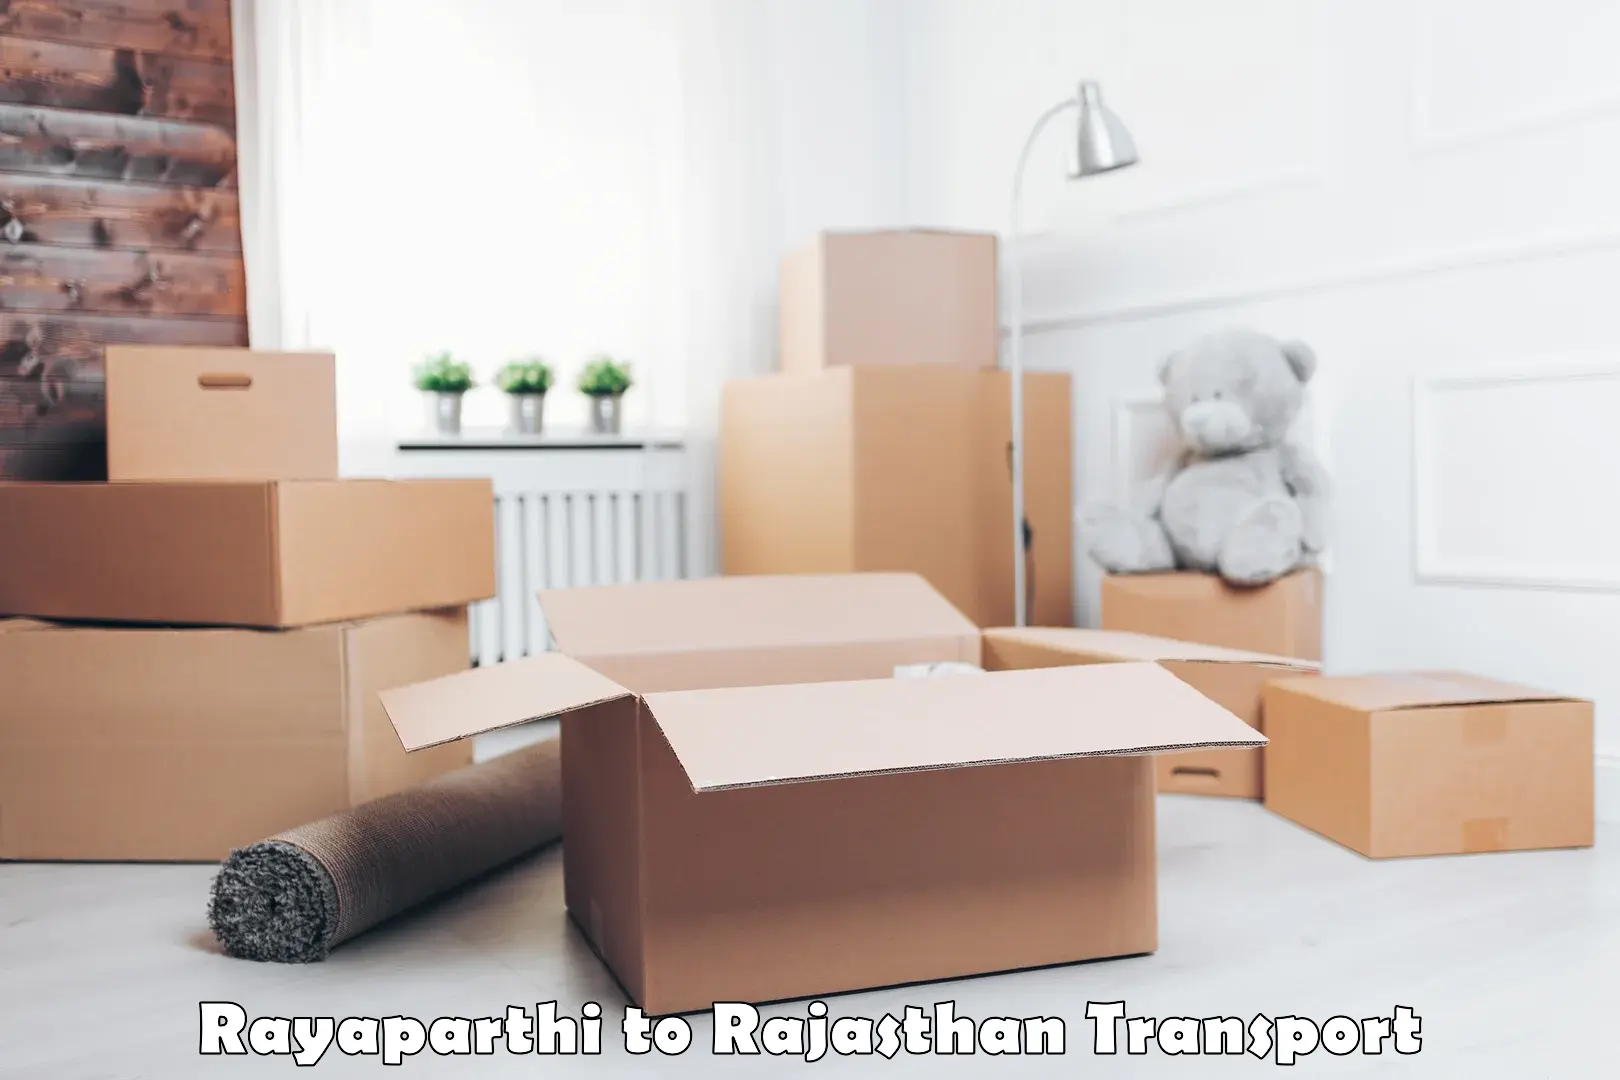 Online transport service Rayaparthi to Ghator